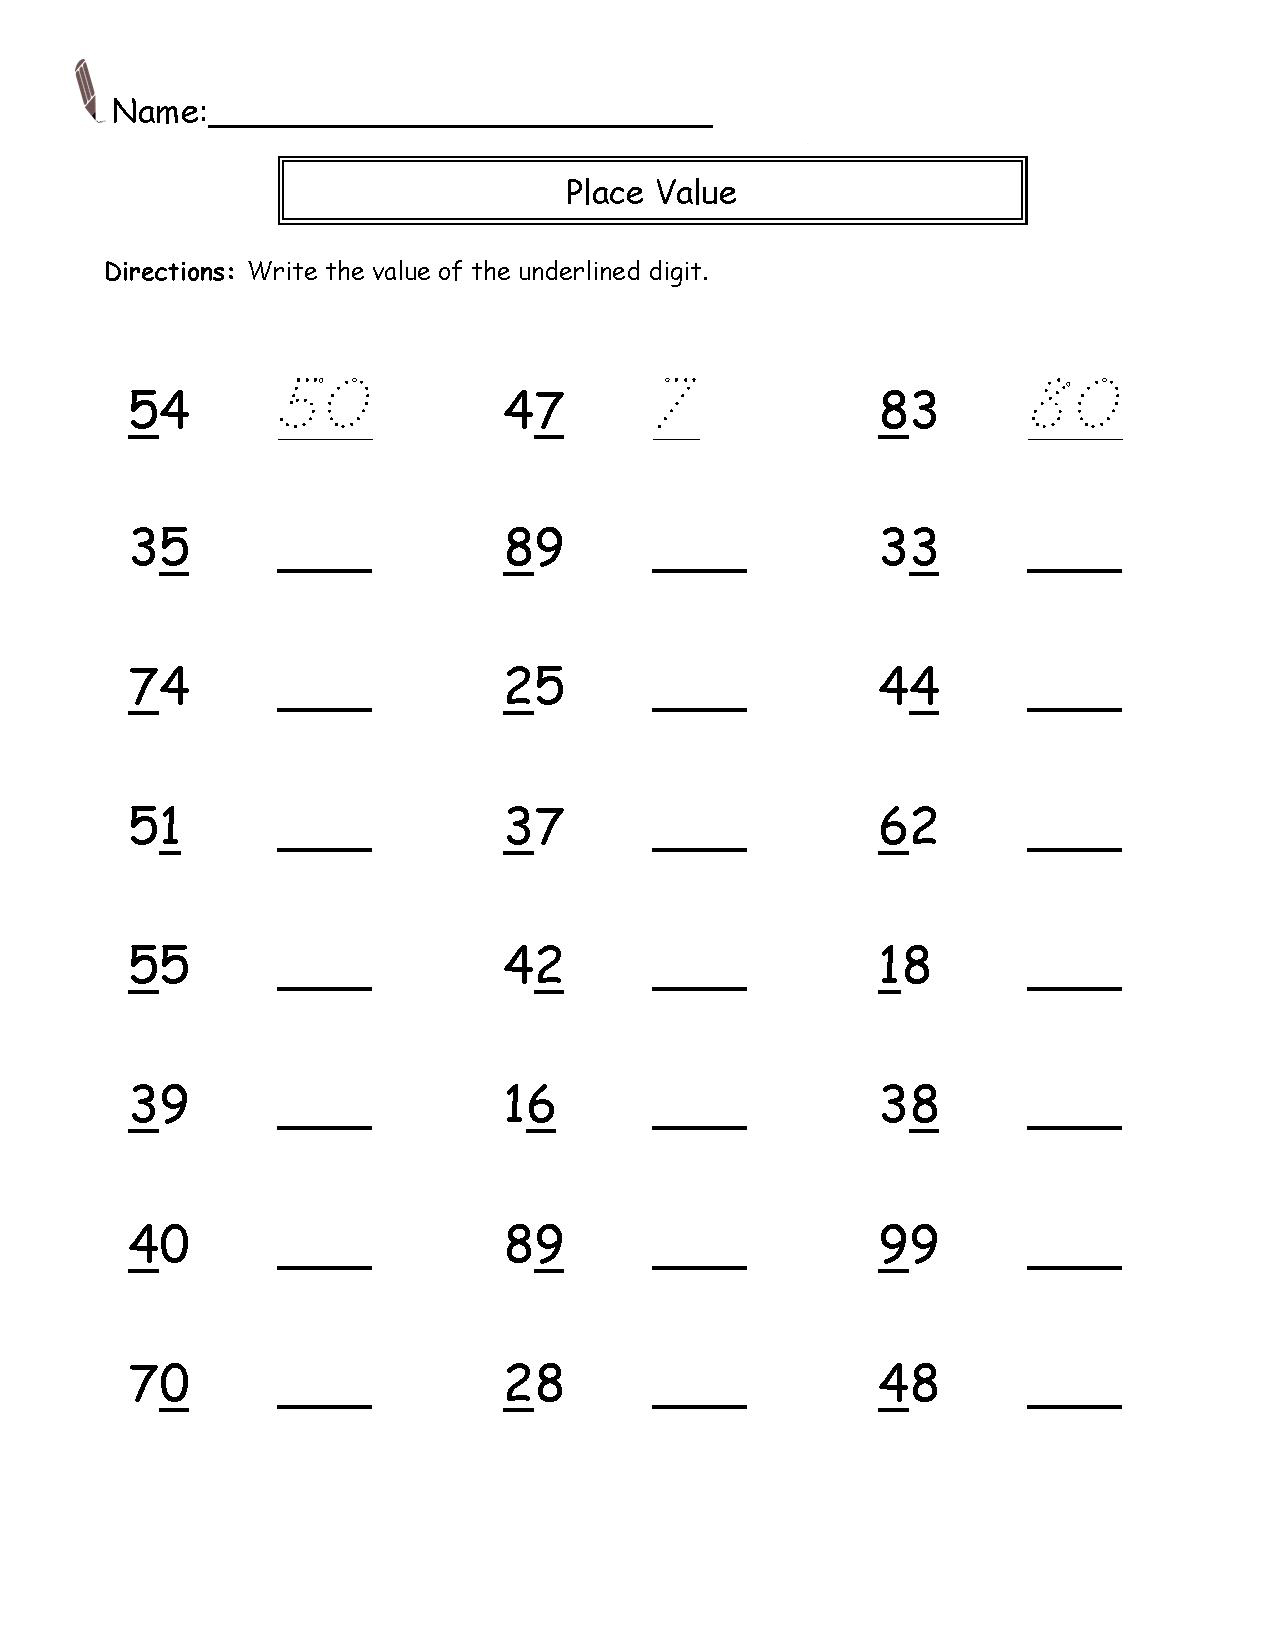 printable-math-worksheets-2nd-grade